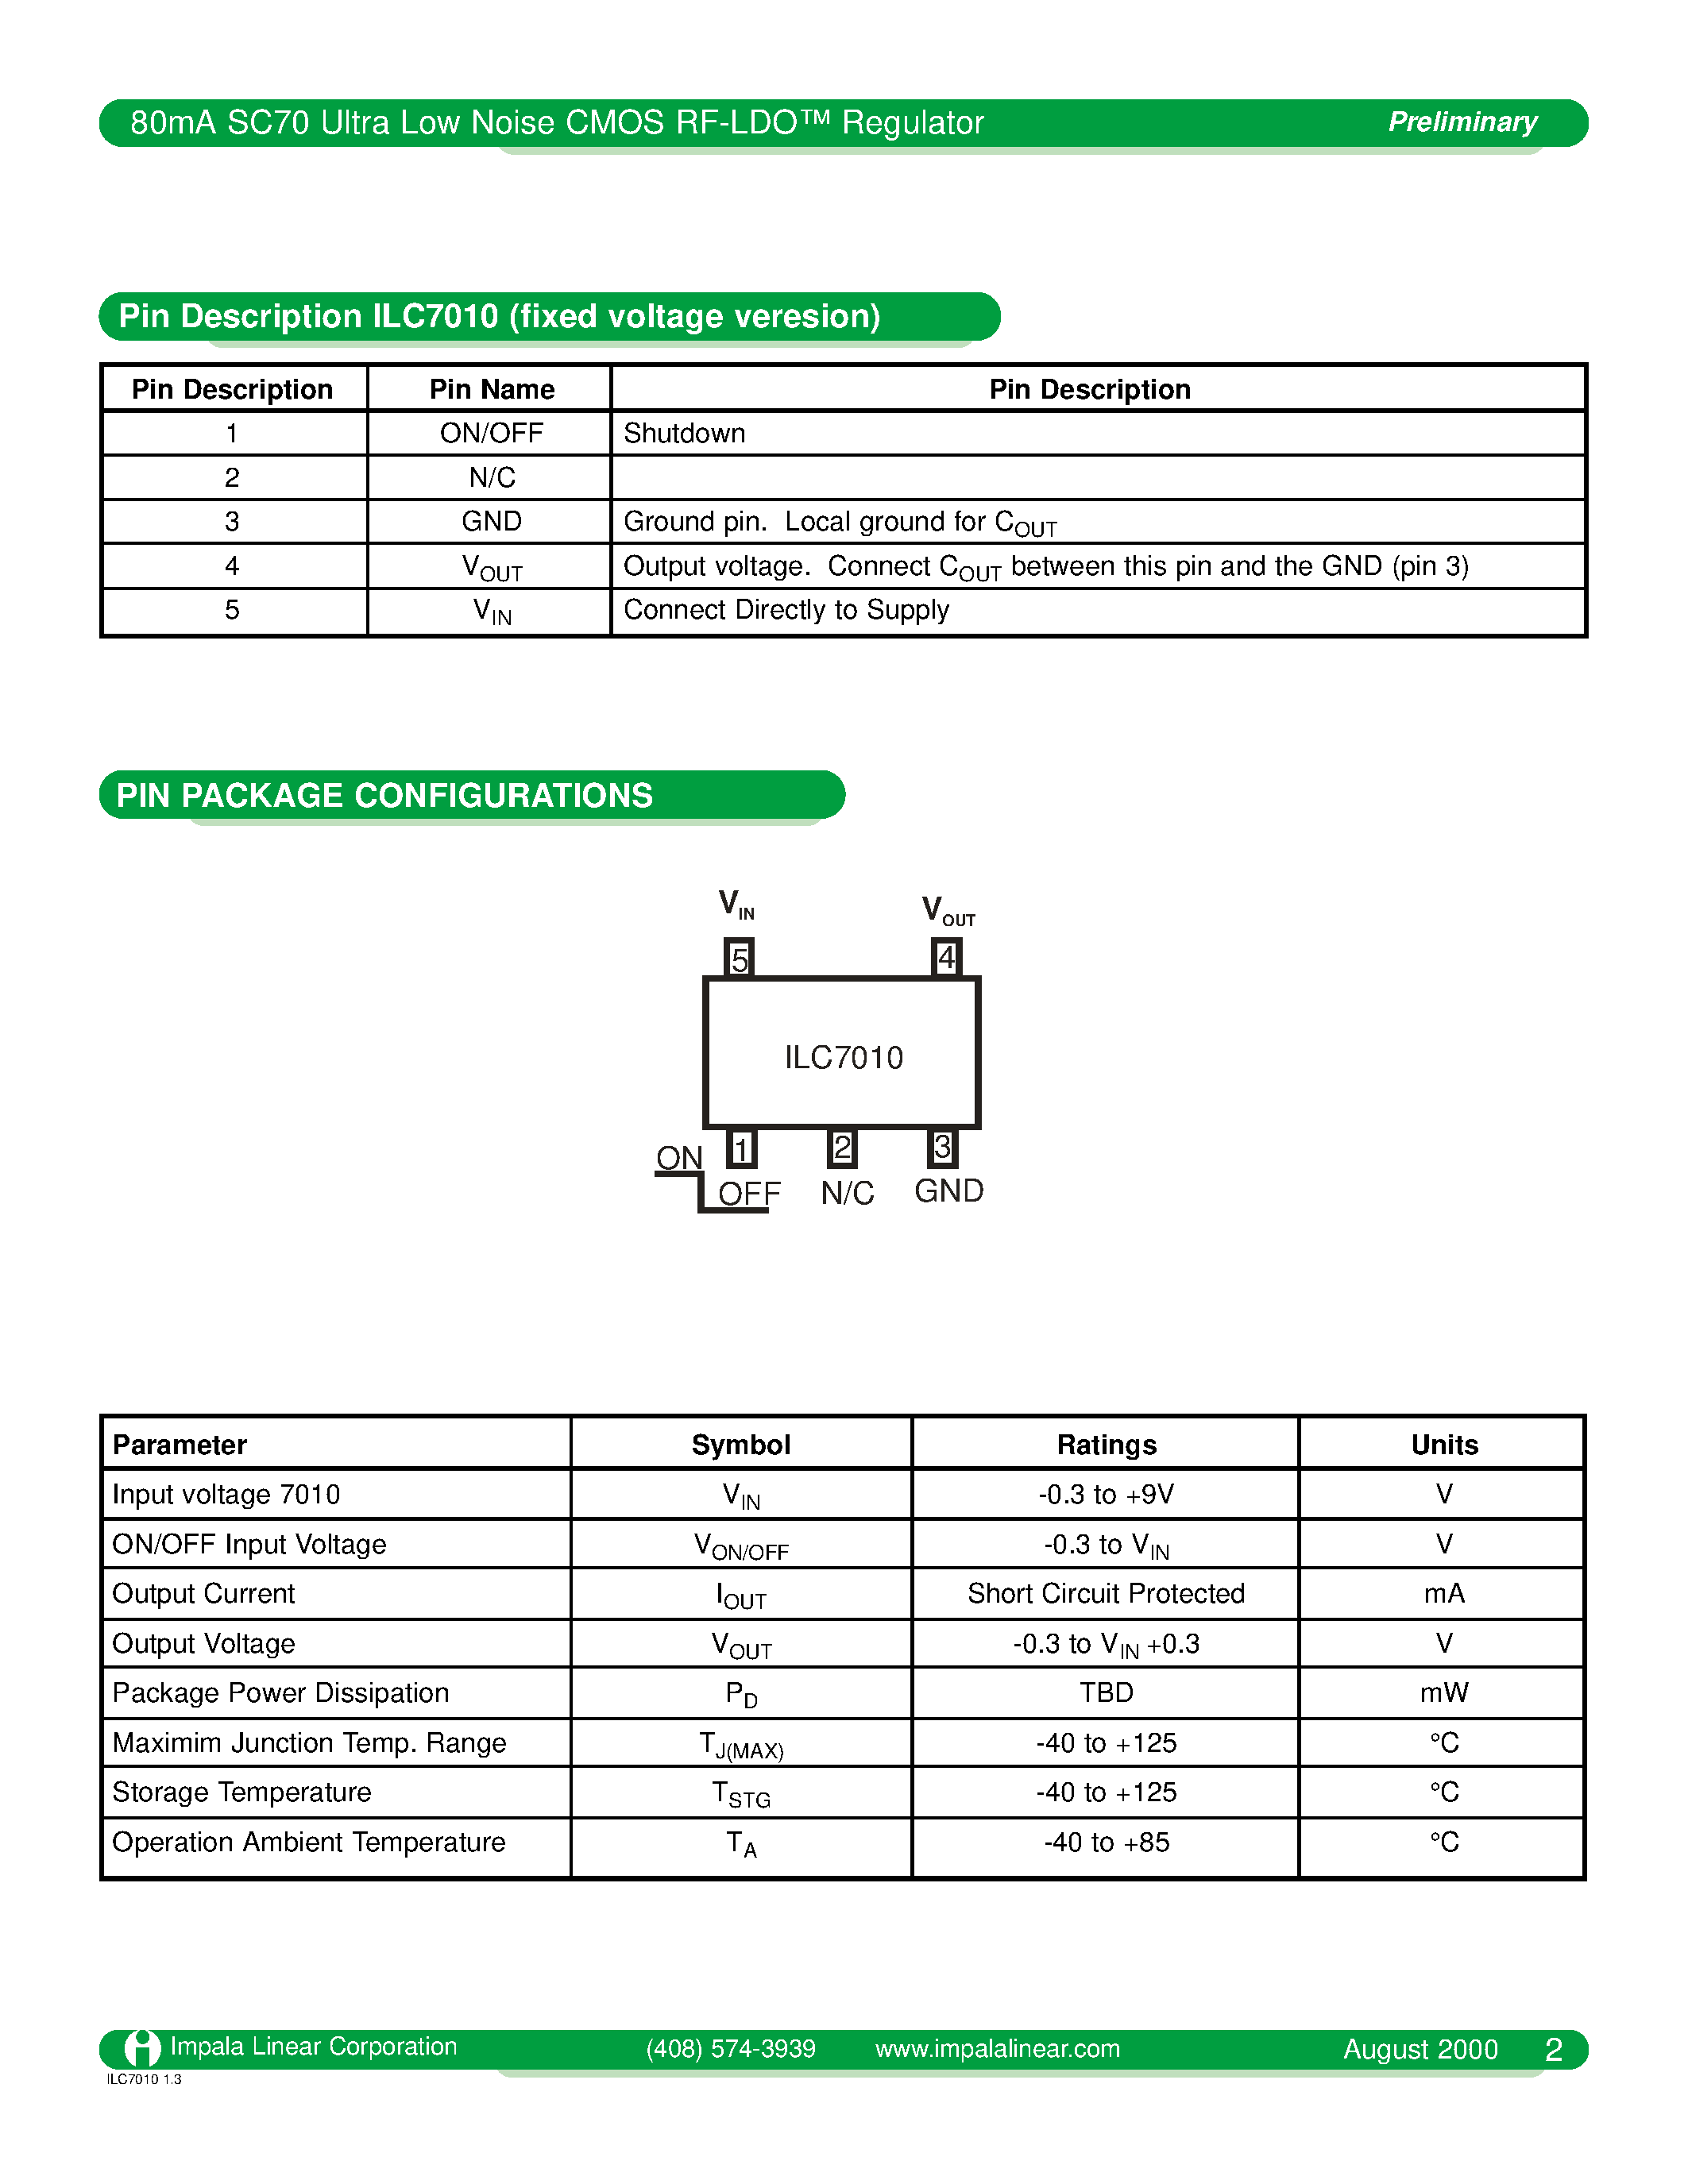 Datasheet ILC7010C5-30 - 80MA SC70 ULTRA LOW NOISE CMOS RF-LDO REGULATOR page 2